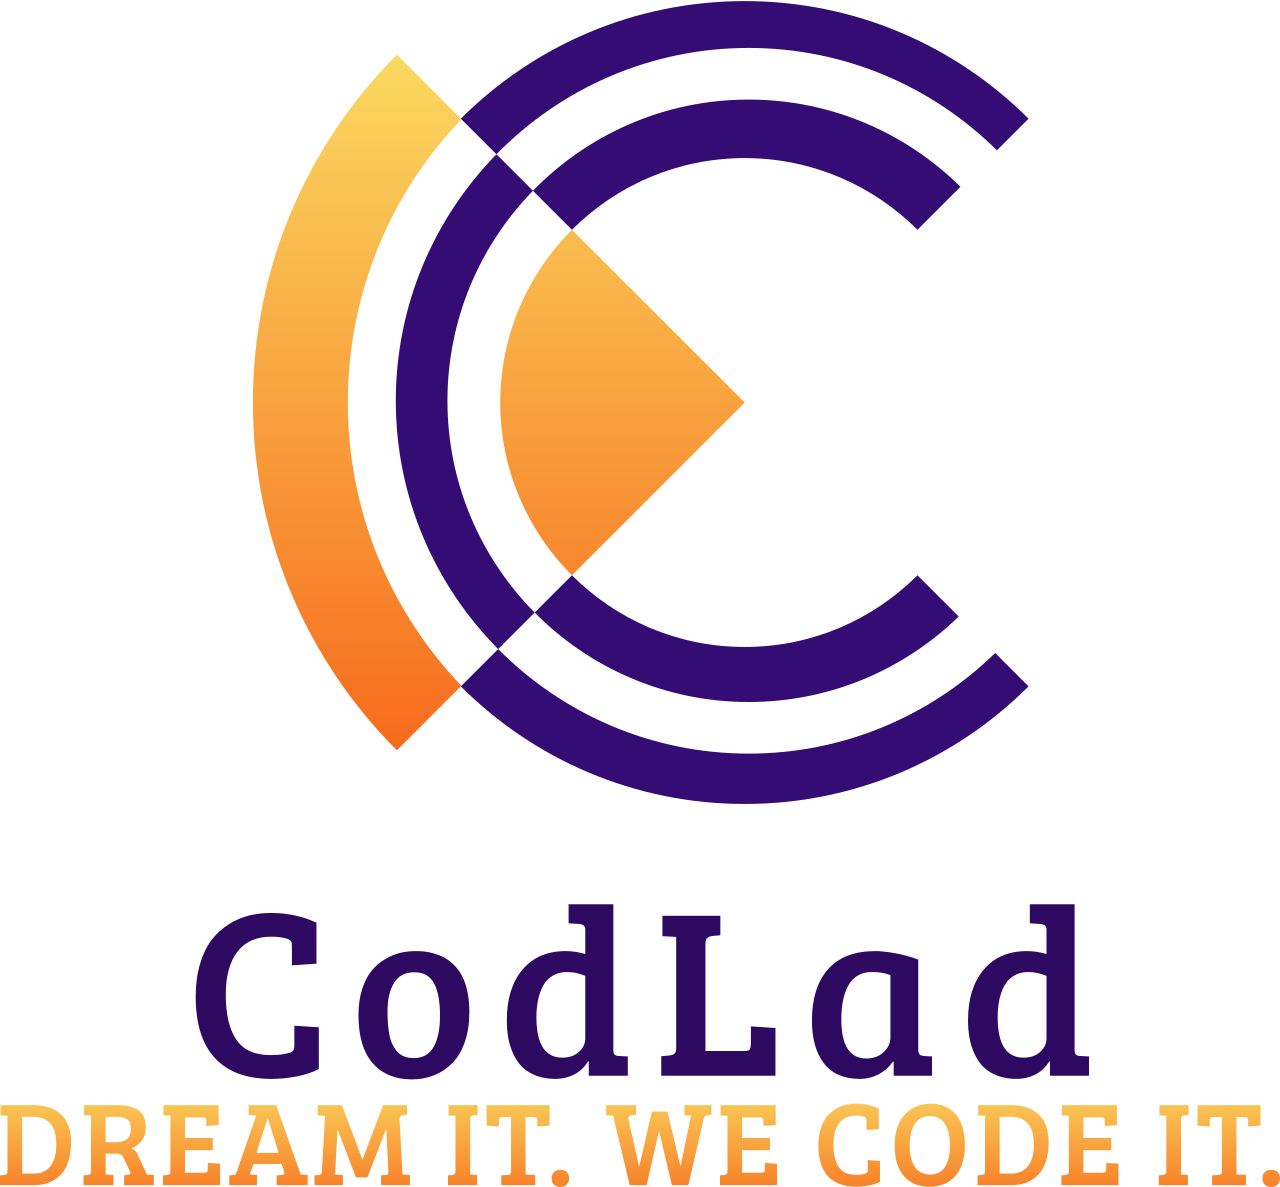 CodLad's logo